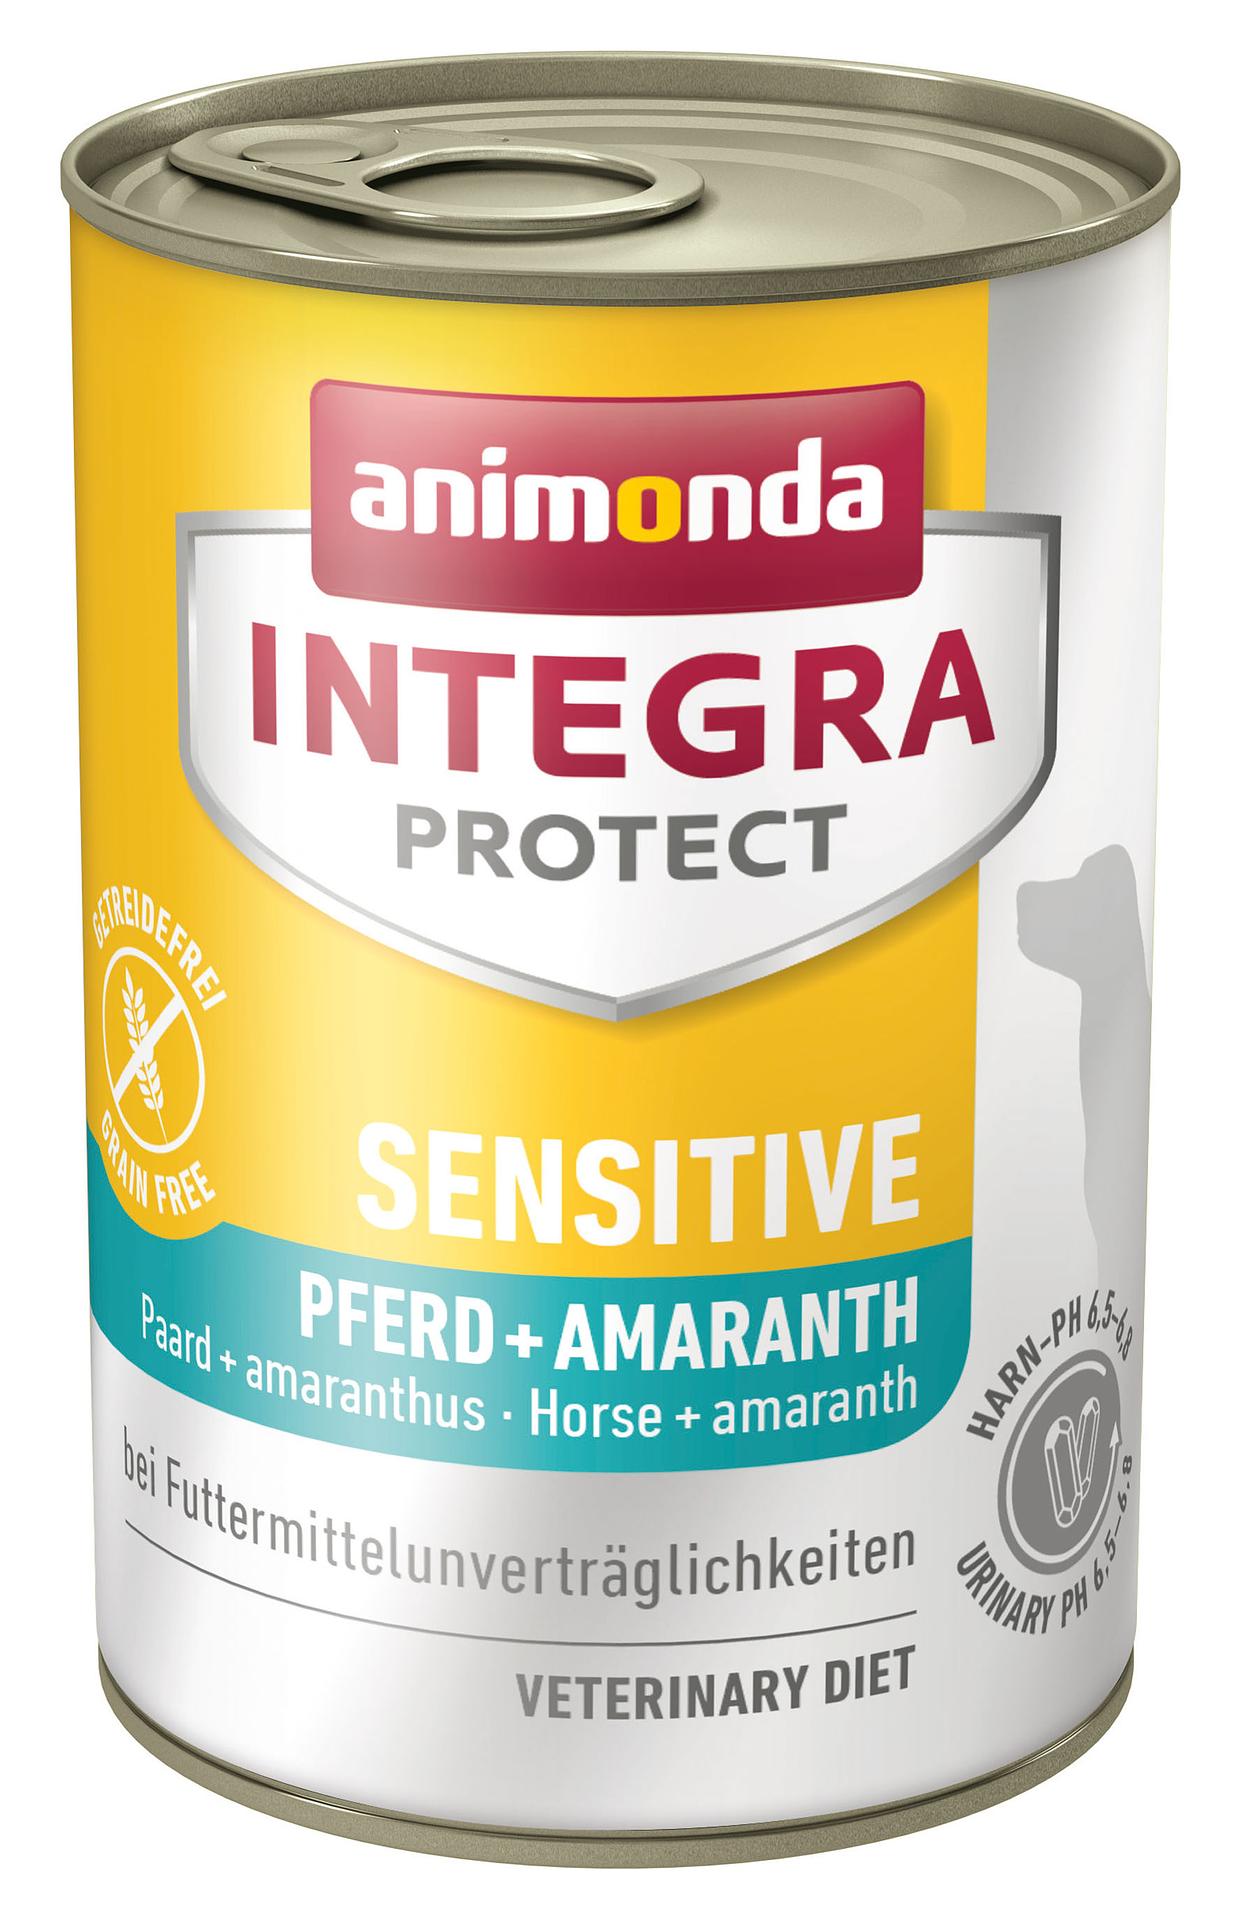 animonda Integra Protect Sensitive, cheval & amarante